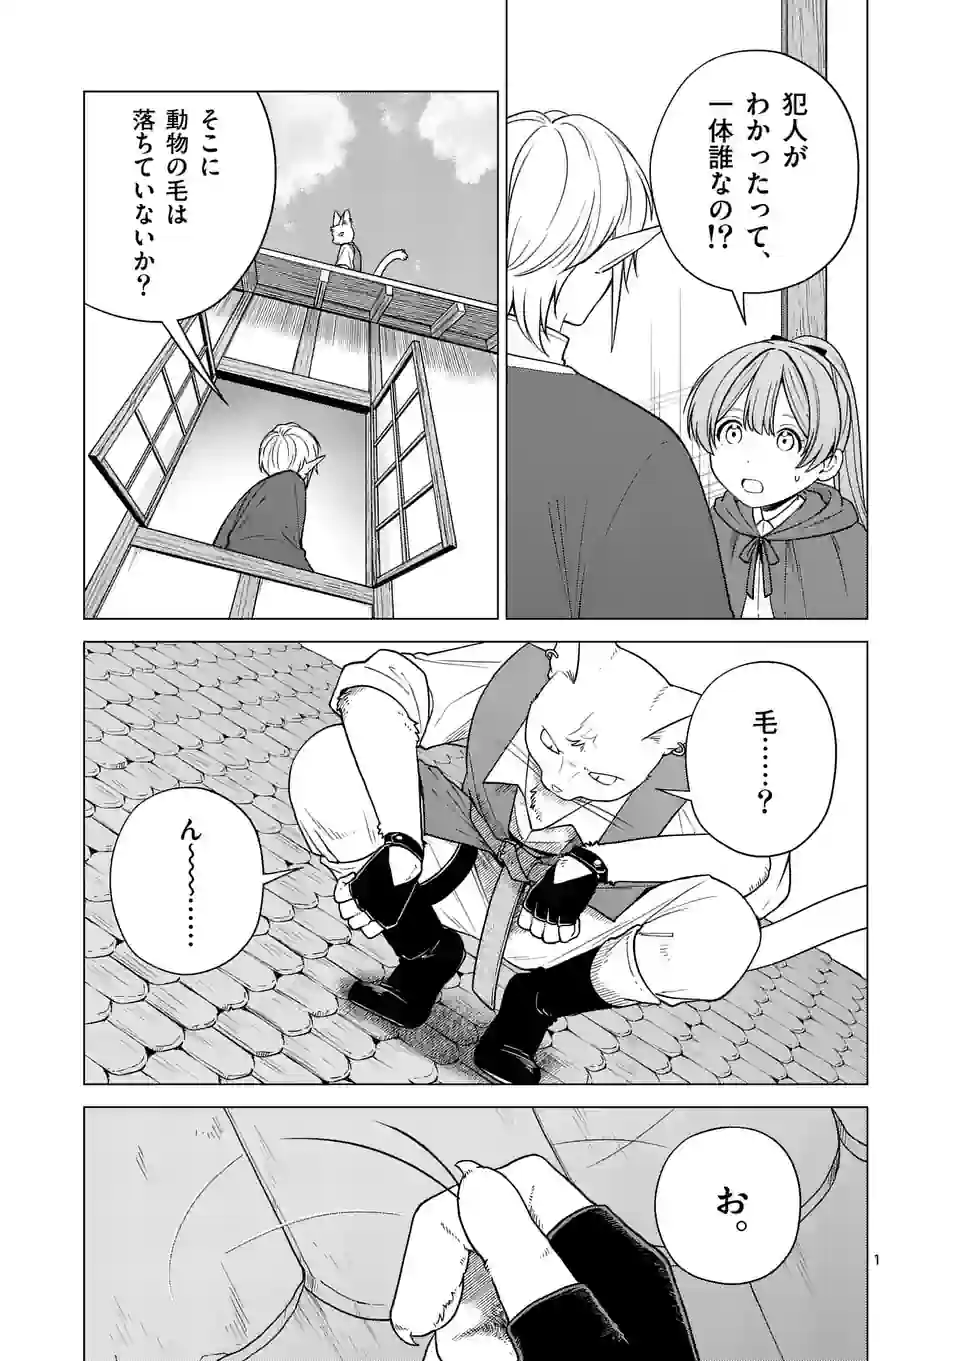 Isekai Pomeranian to Niji no Mofumofu Tabi - Chapter 6 - Page 1